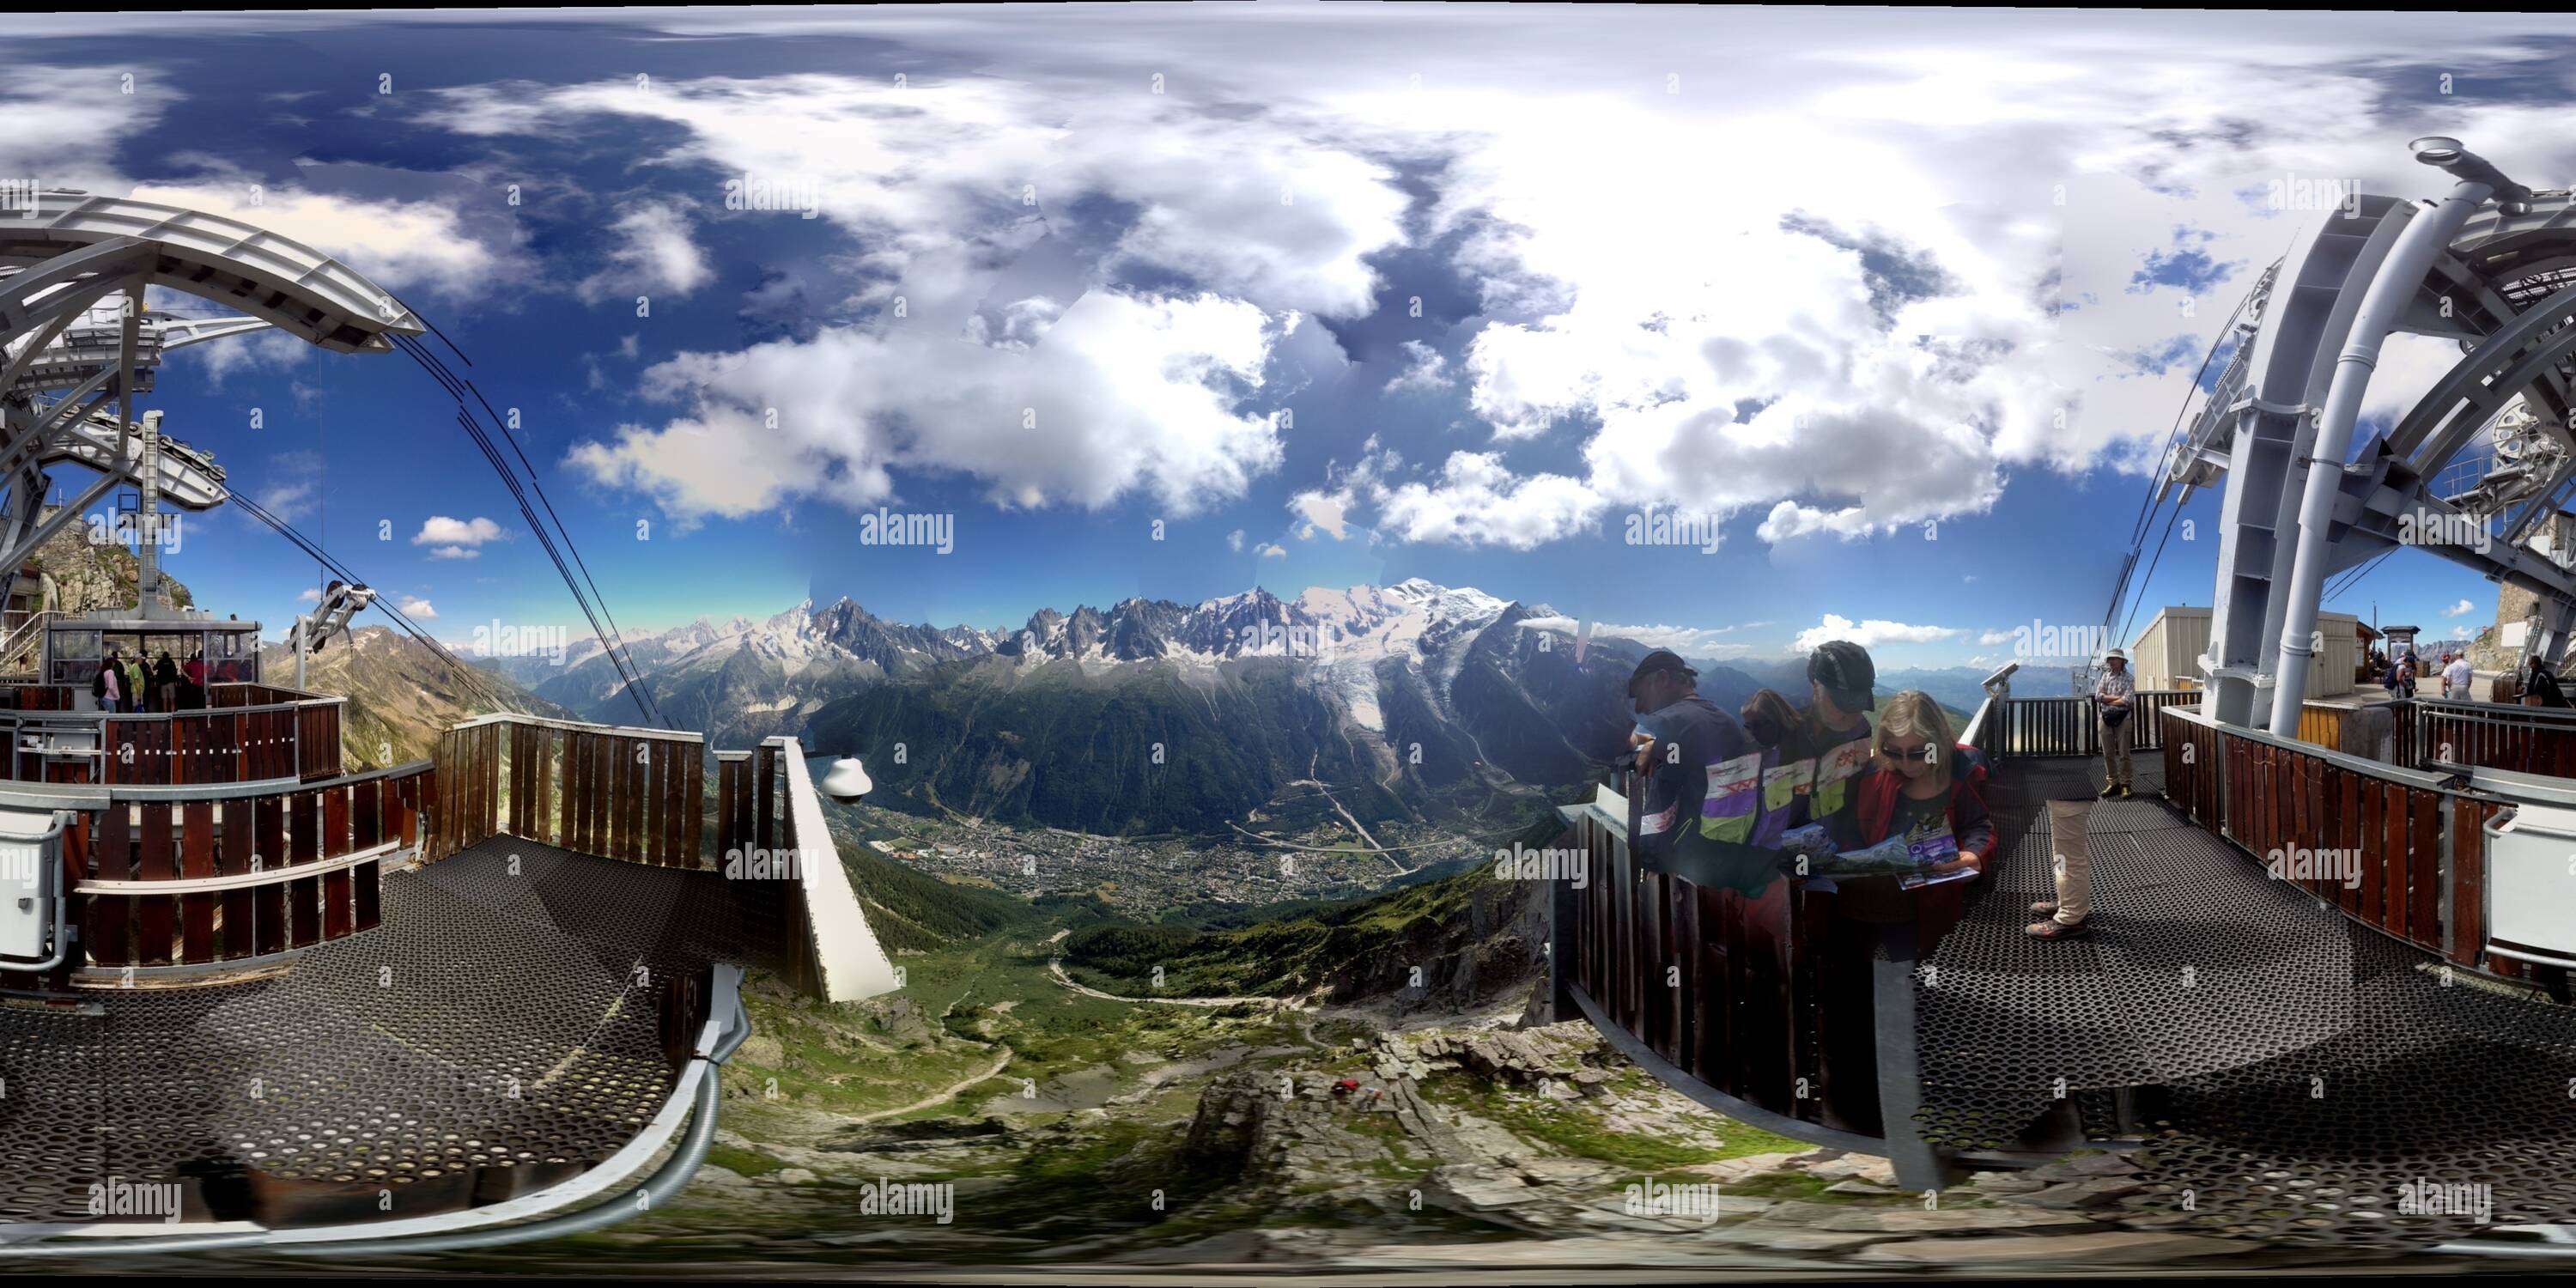 360 degree panoramic view of Photosynth Panorama